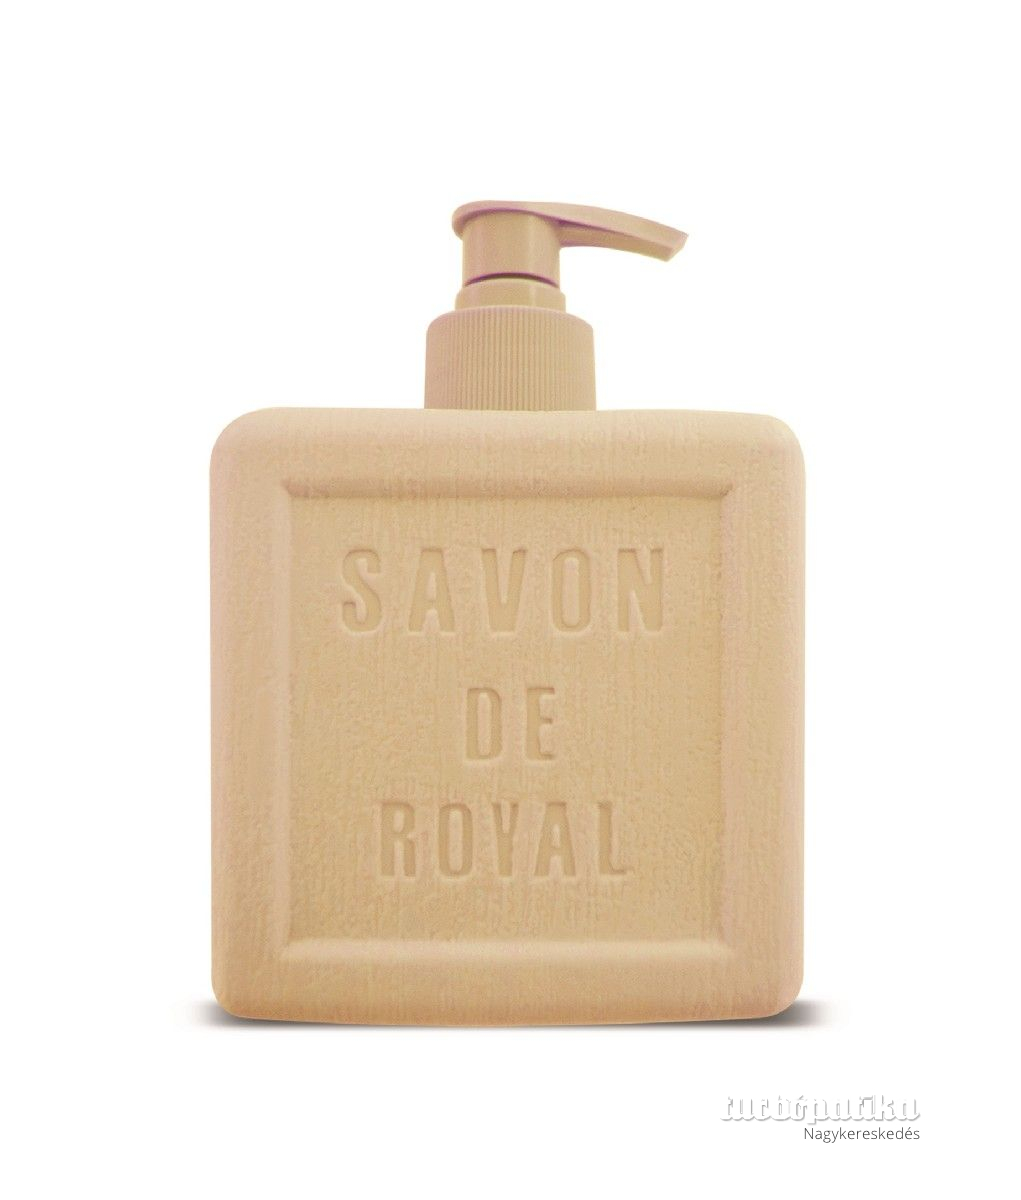 Savon de Royal folyékony szappan Provence 500 ml Cream